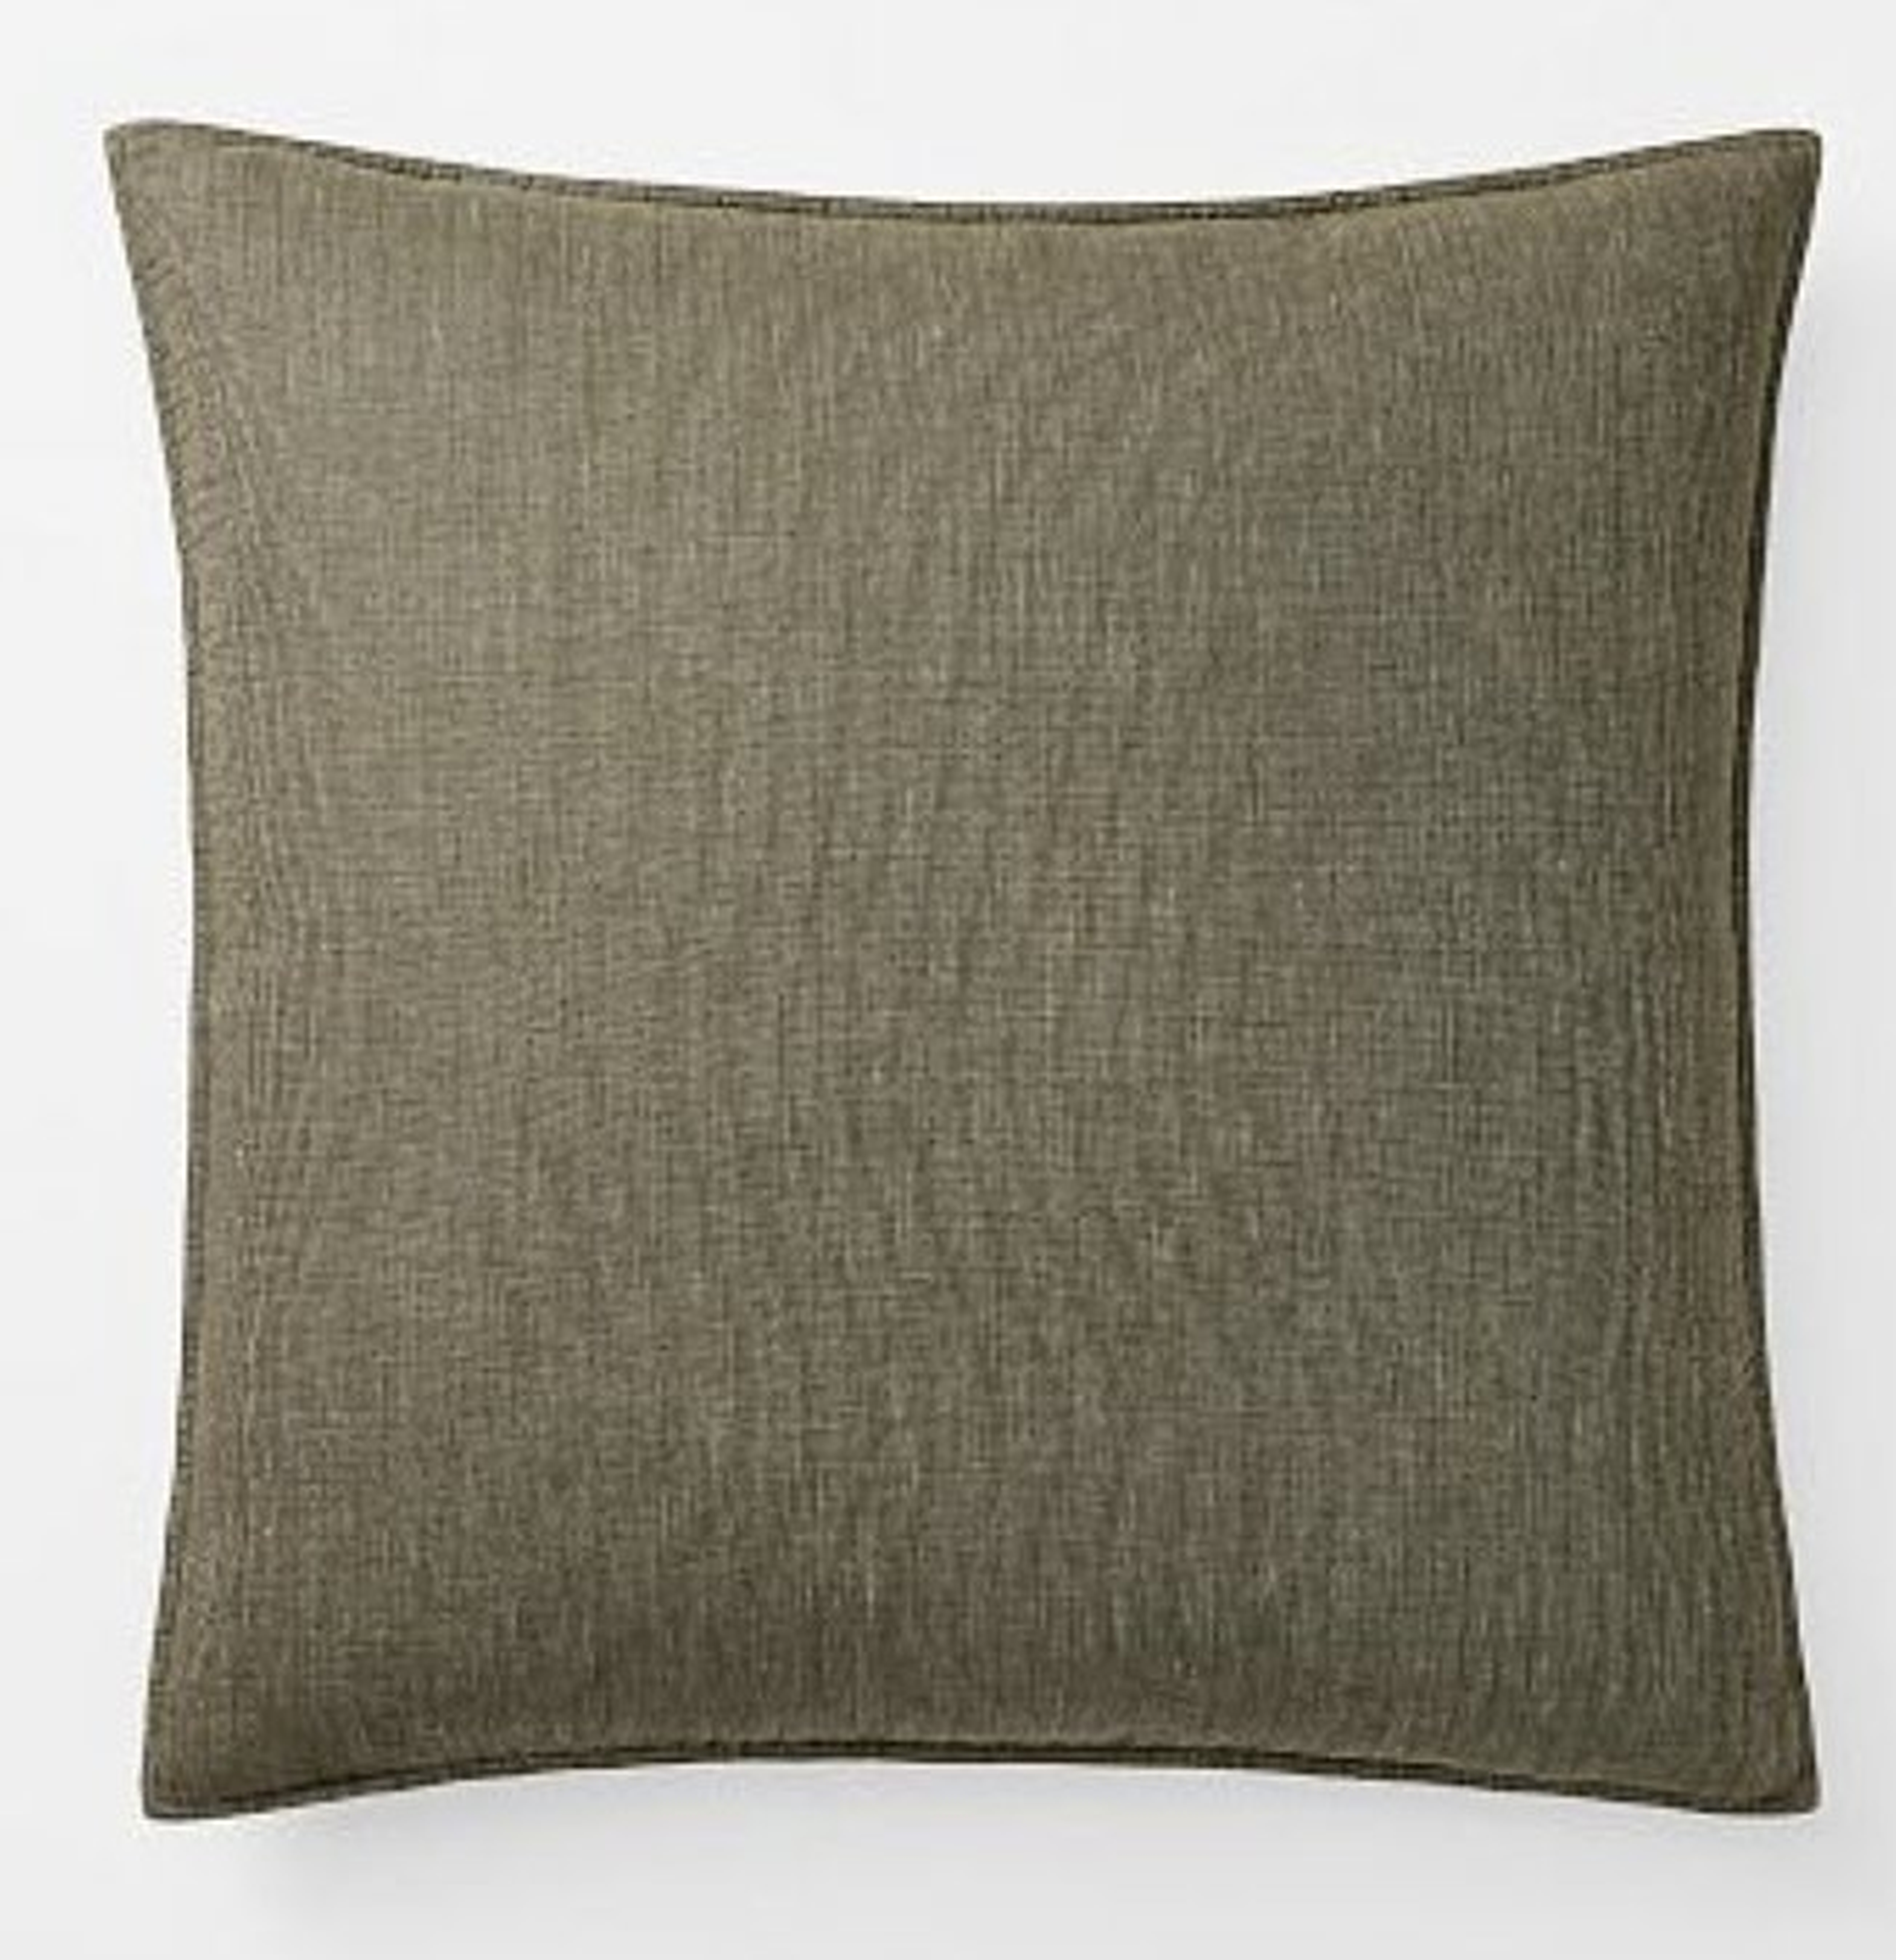 European Flax Linen Pillow Cover, 24"x24", Dark Olive - West Elm